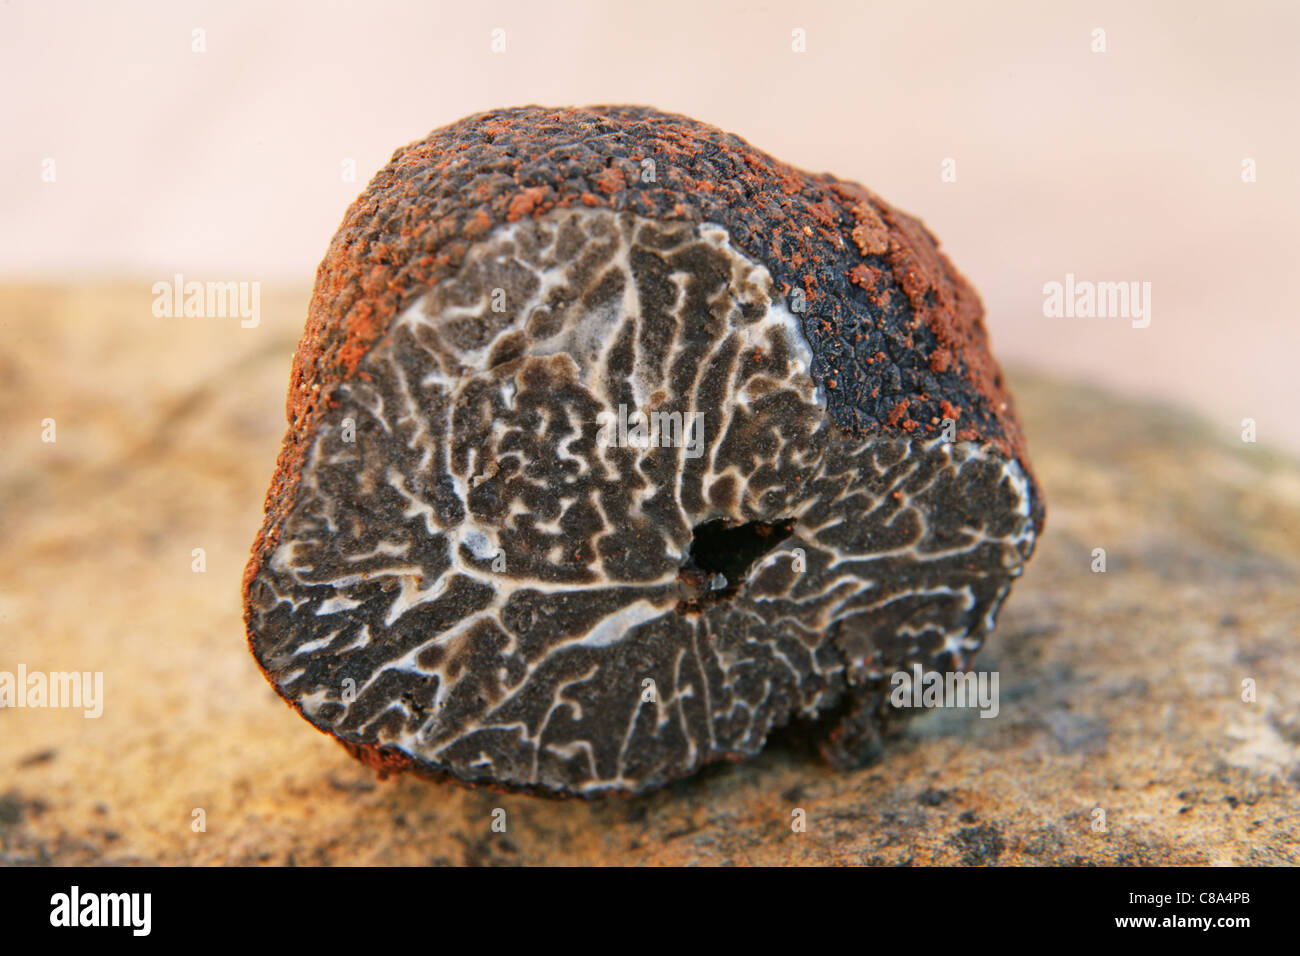 Brumale truffle cut in half Stock Photo